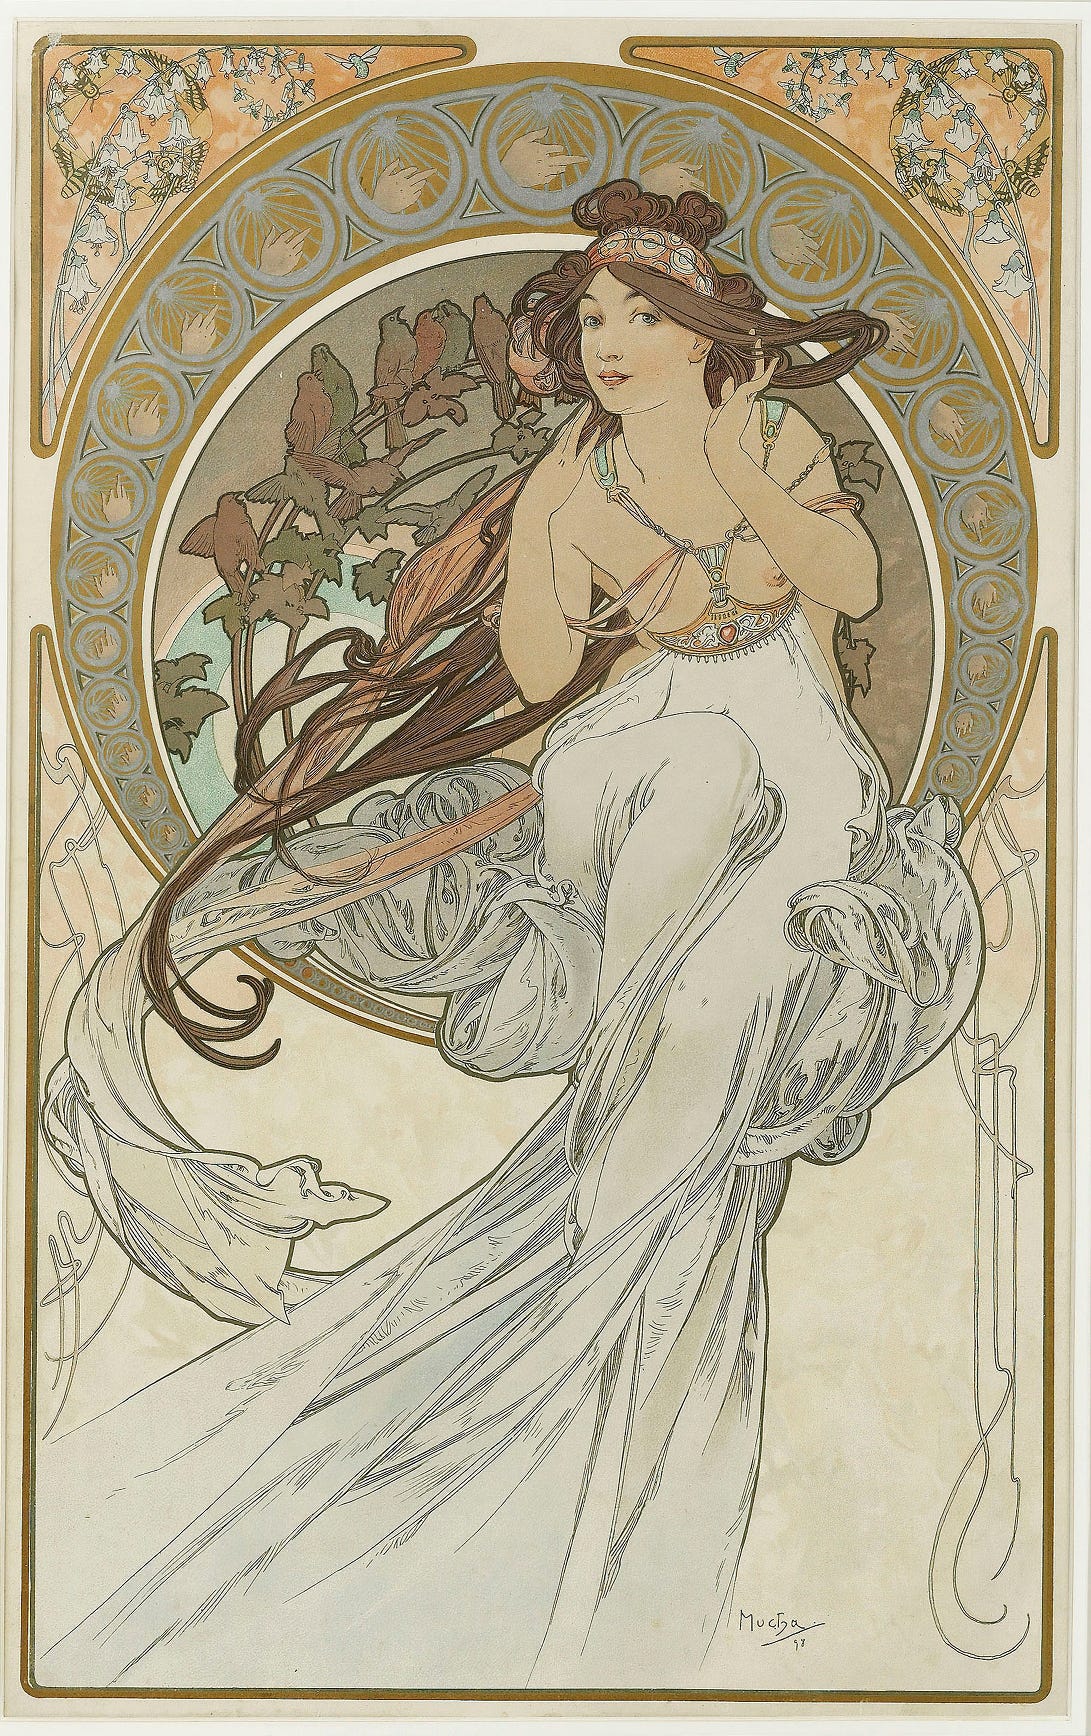 The Arts 1 (1898) by Alphonse Mucha